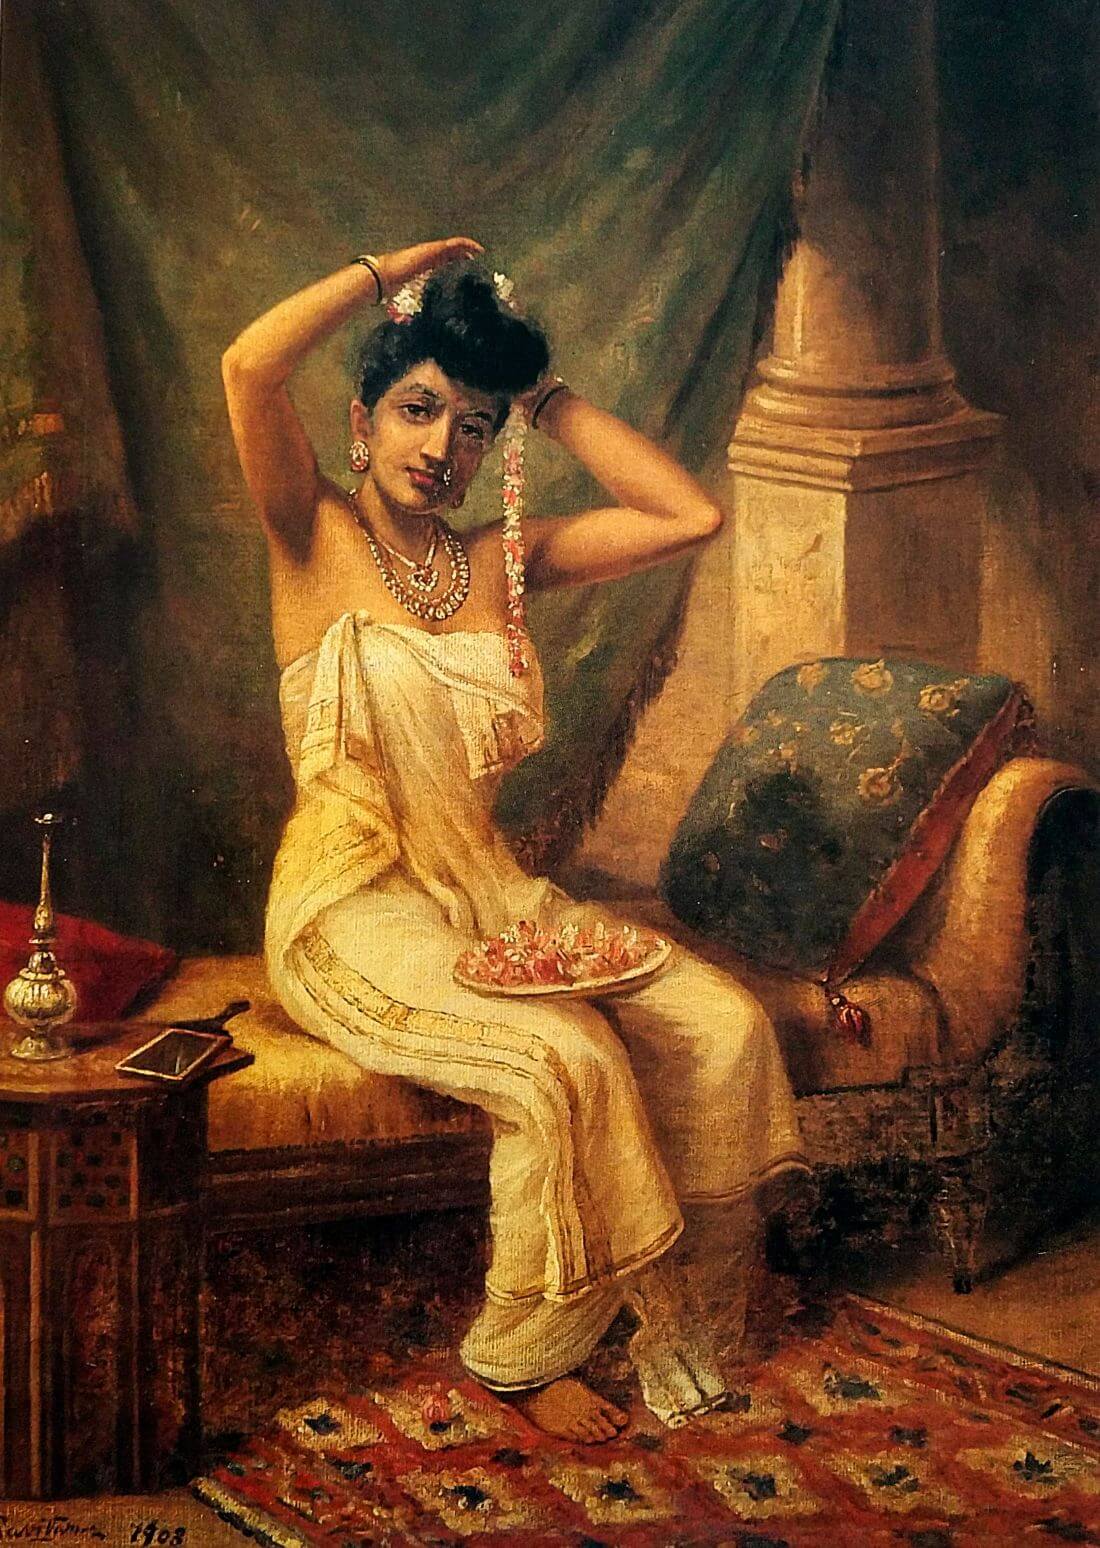 Lady Adorning Her Hair - Raja Ravi Varma - Famous Indian Painting ...